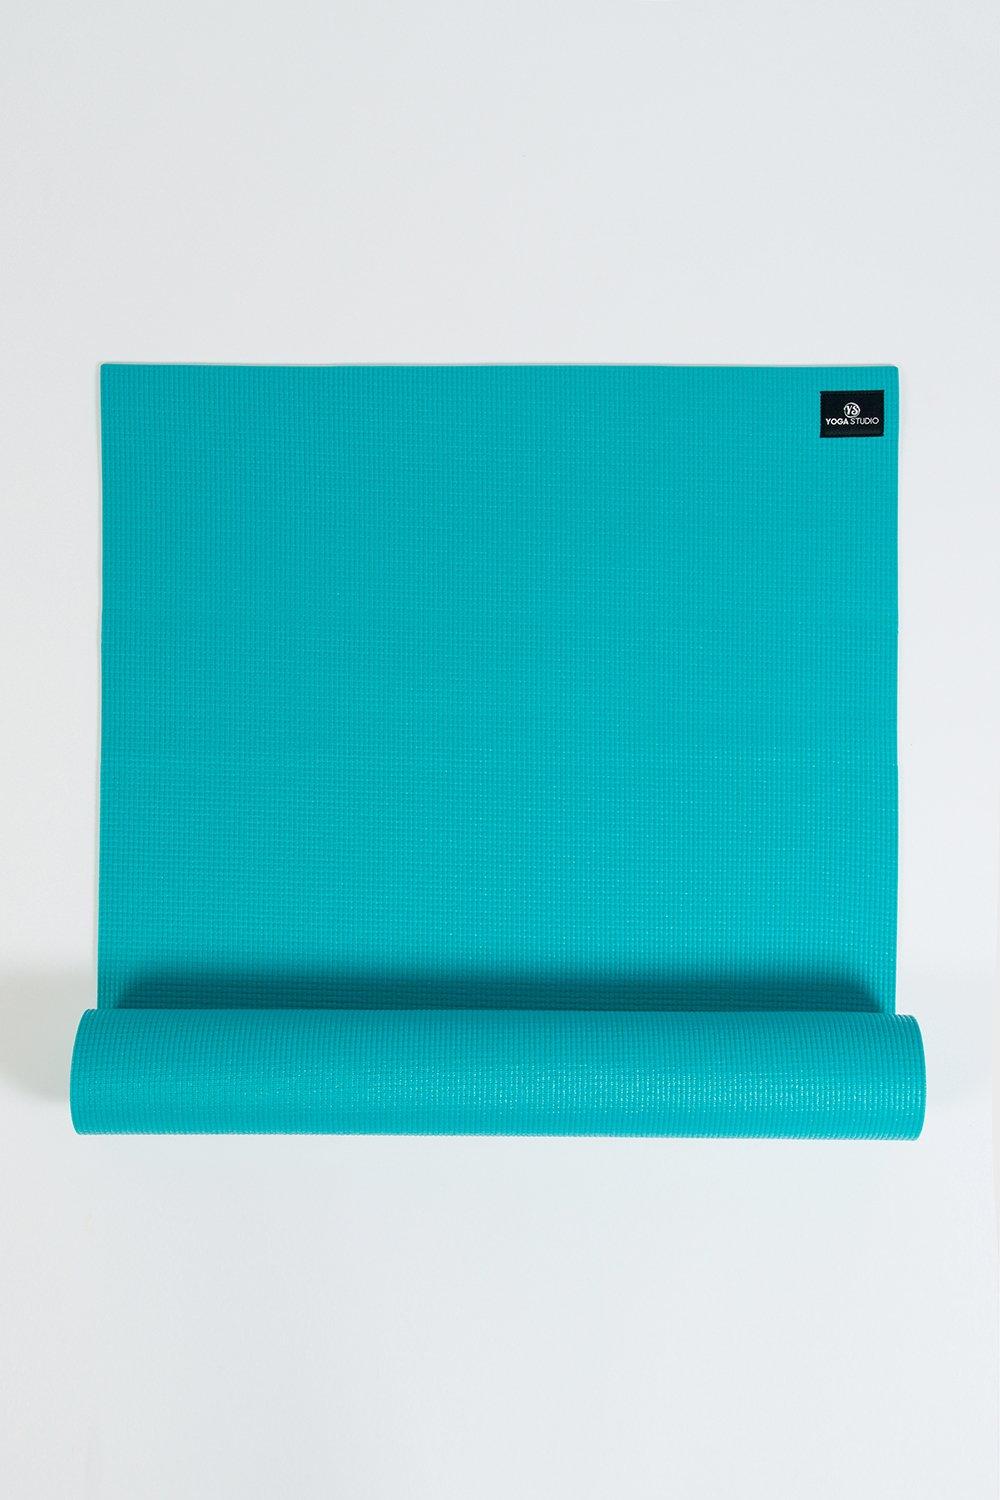 Yoga Studio Sticky Yoga Mat 6mm|turquoise